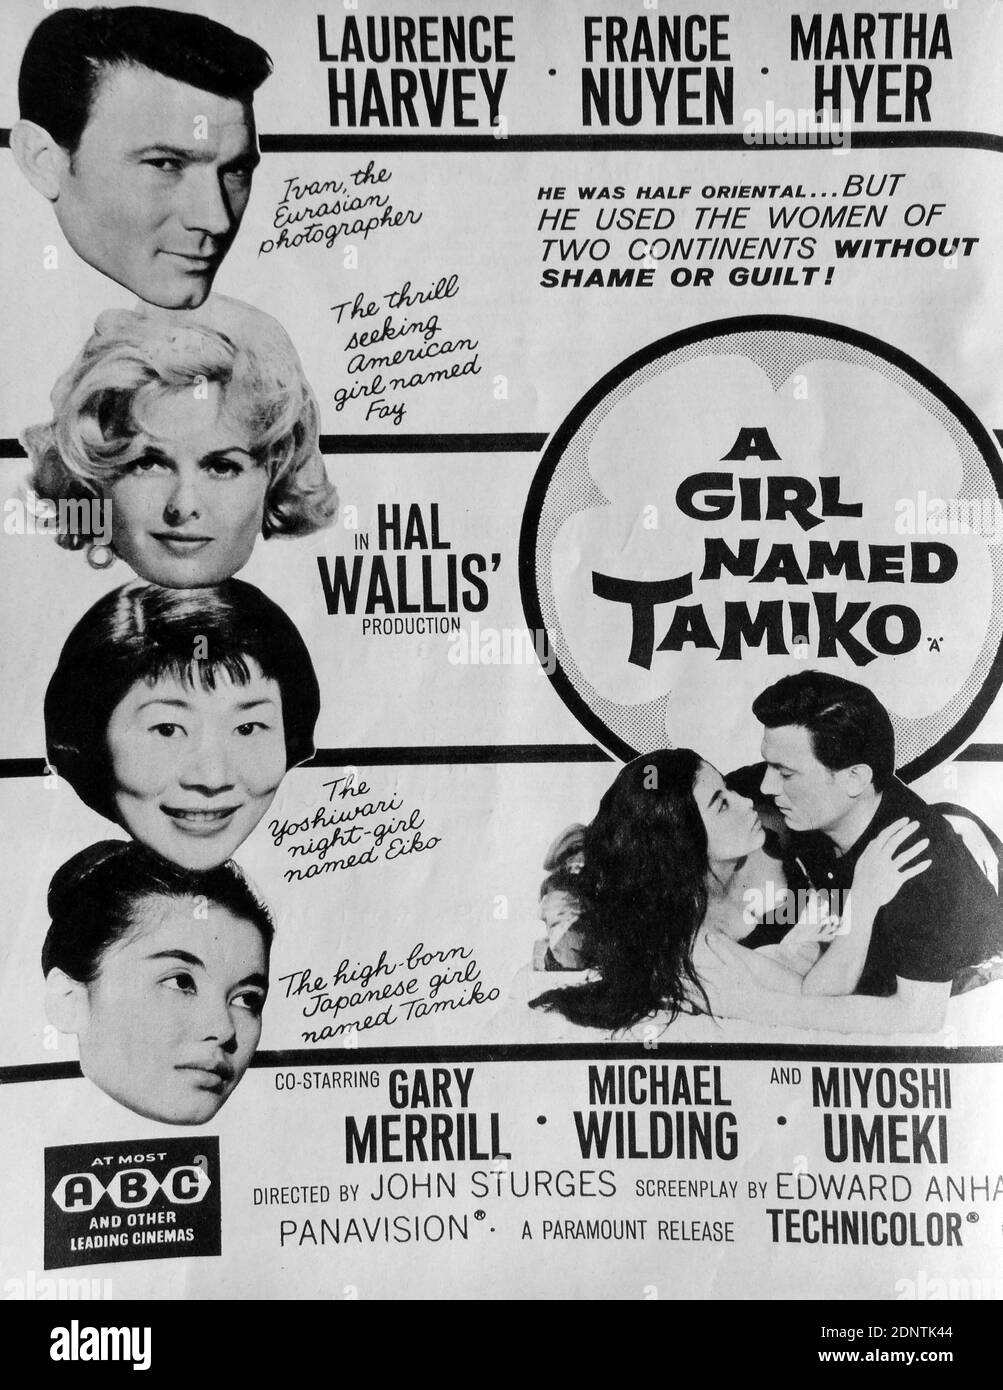 Poster for 'A Girl Named Tamiko' starring Laurence Harvey, Martha Hyer; France Nuyen; Miyoshi Umeki. Stock Photo